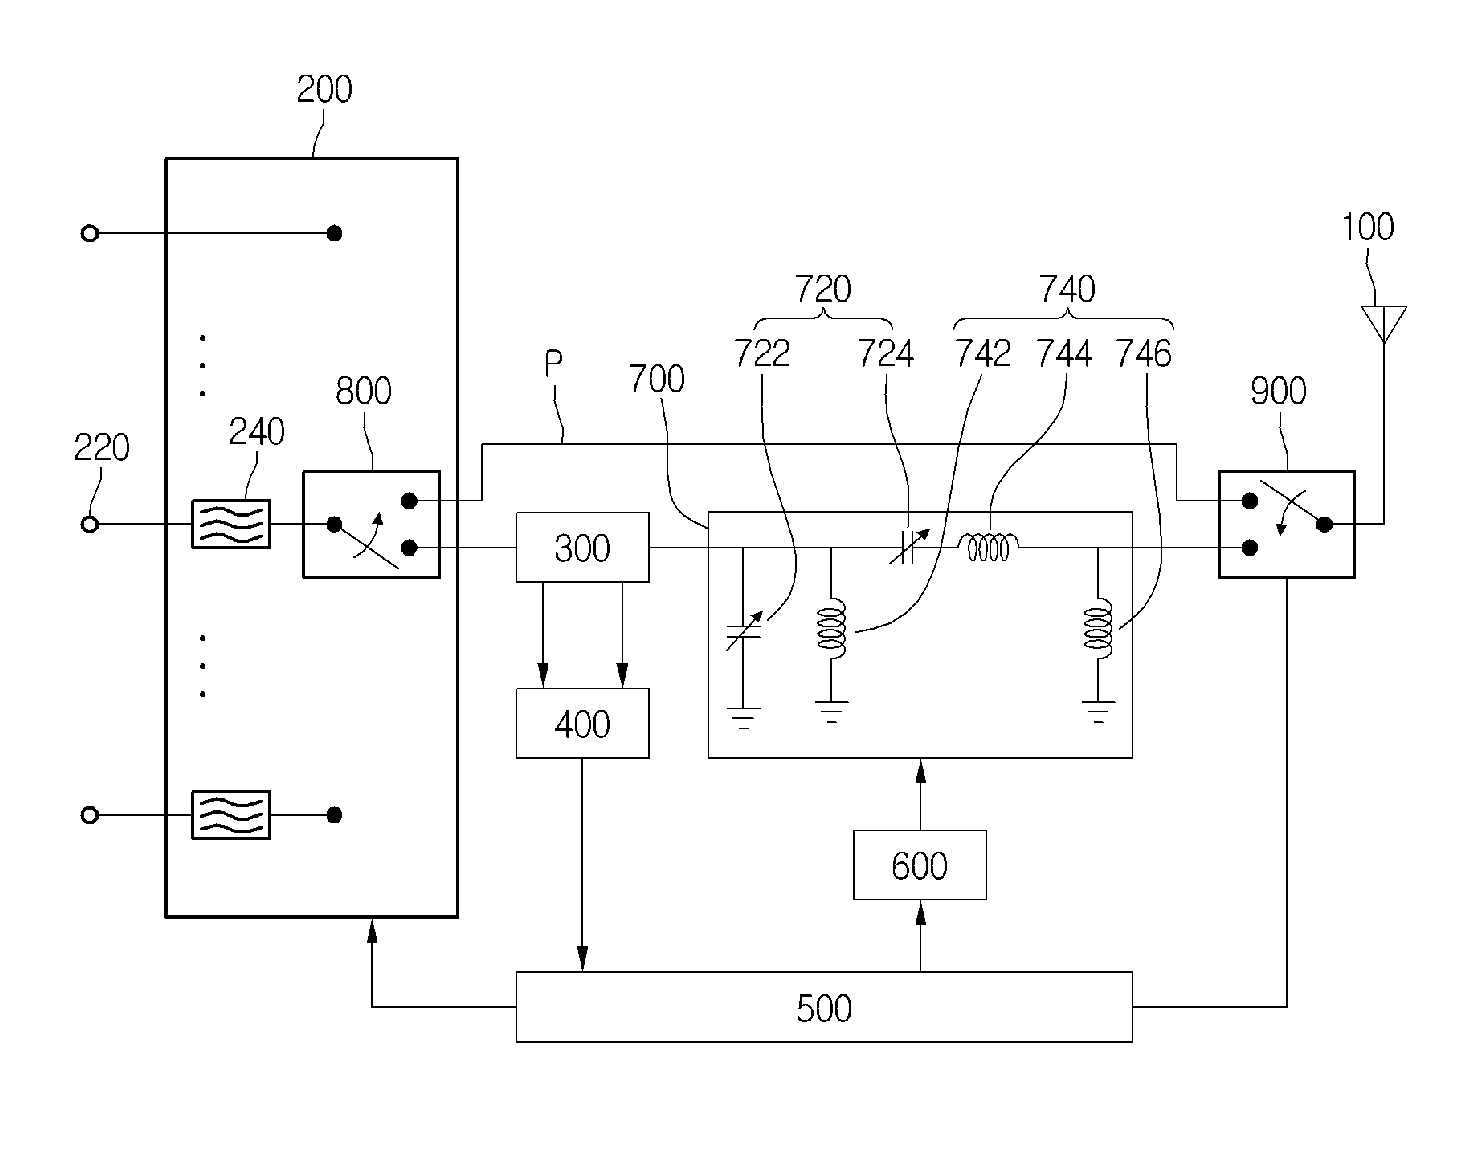 Impedance matching apparatus